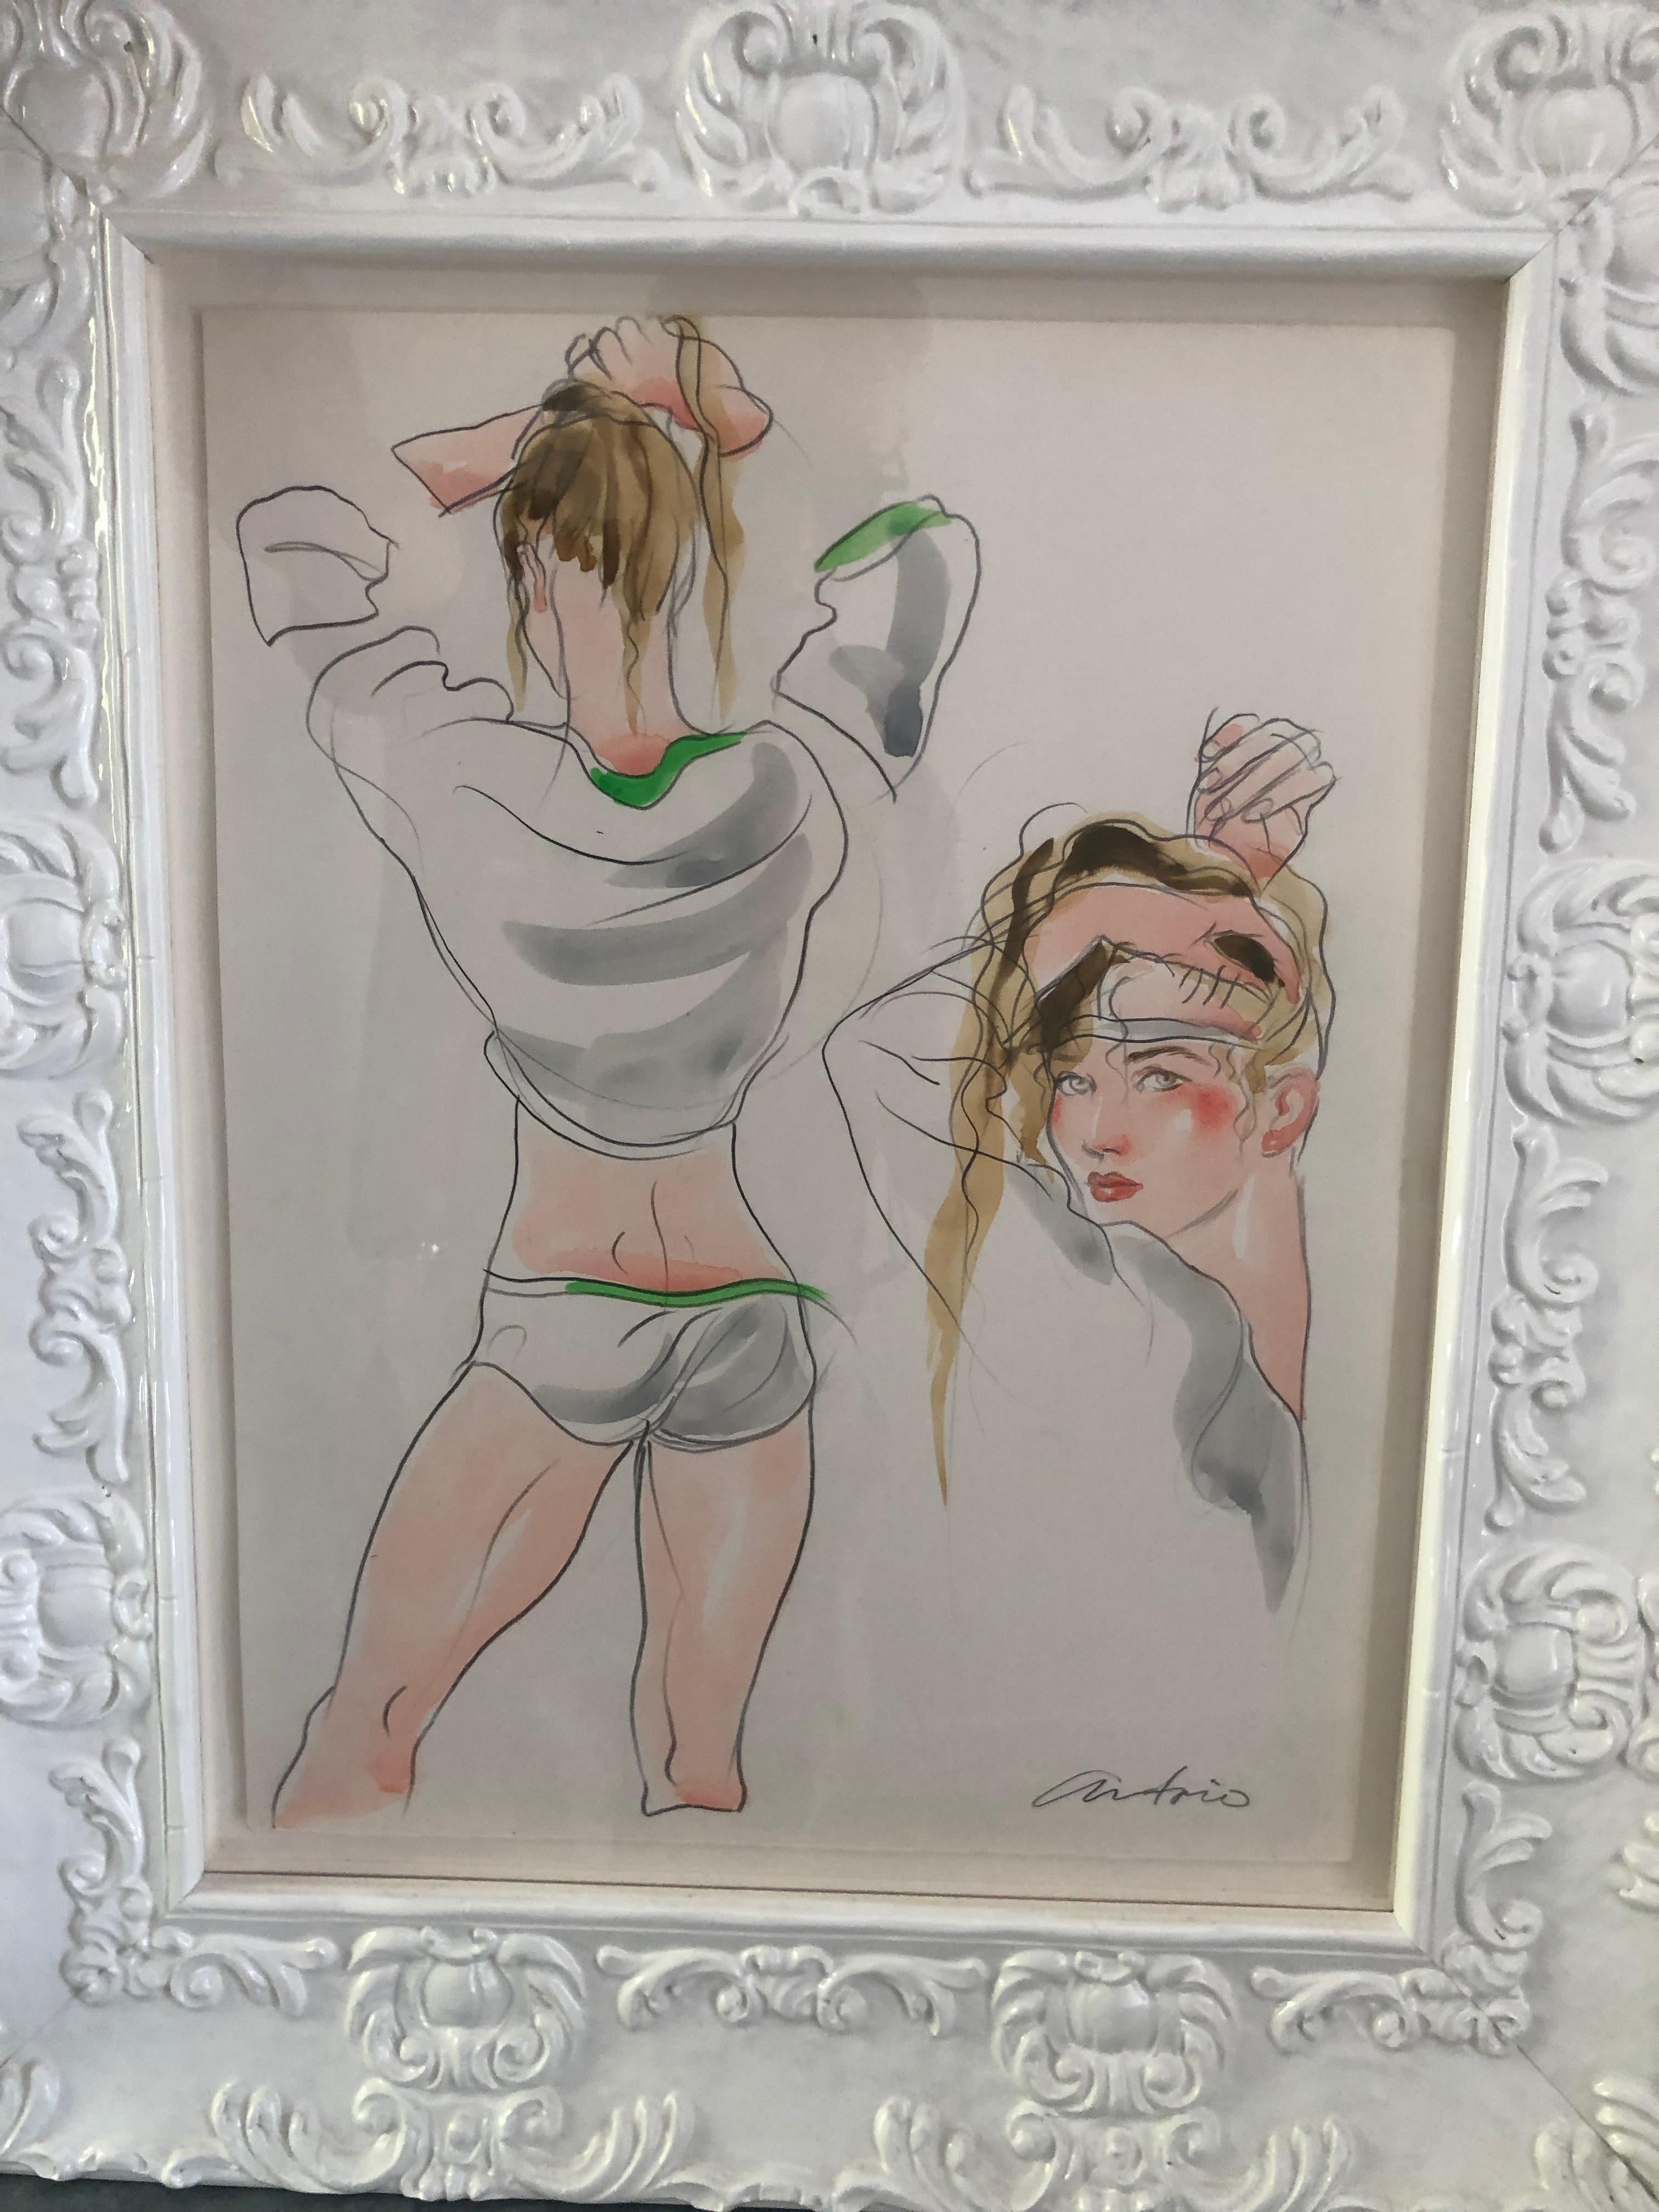 Gray Antonio Lopez Original Framed Watercolor of an Underwear Fashion Illustration